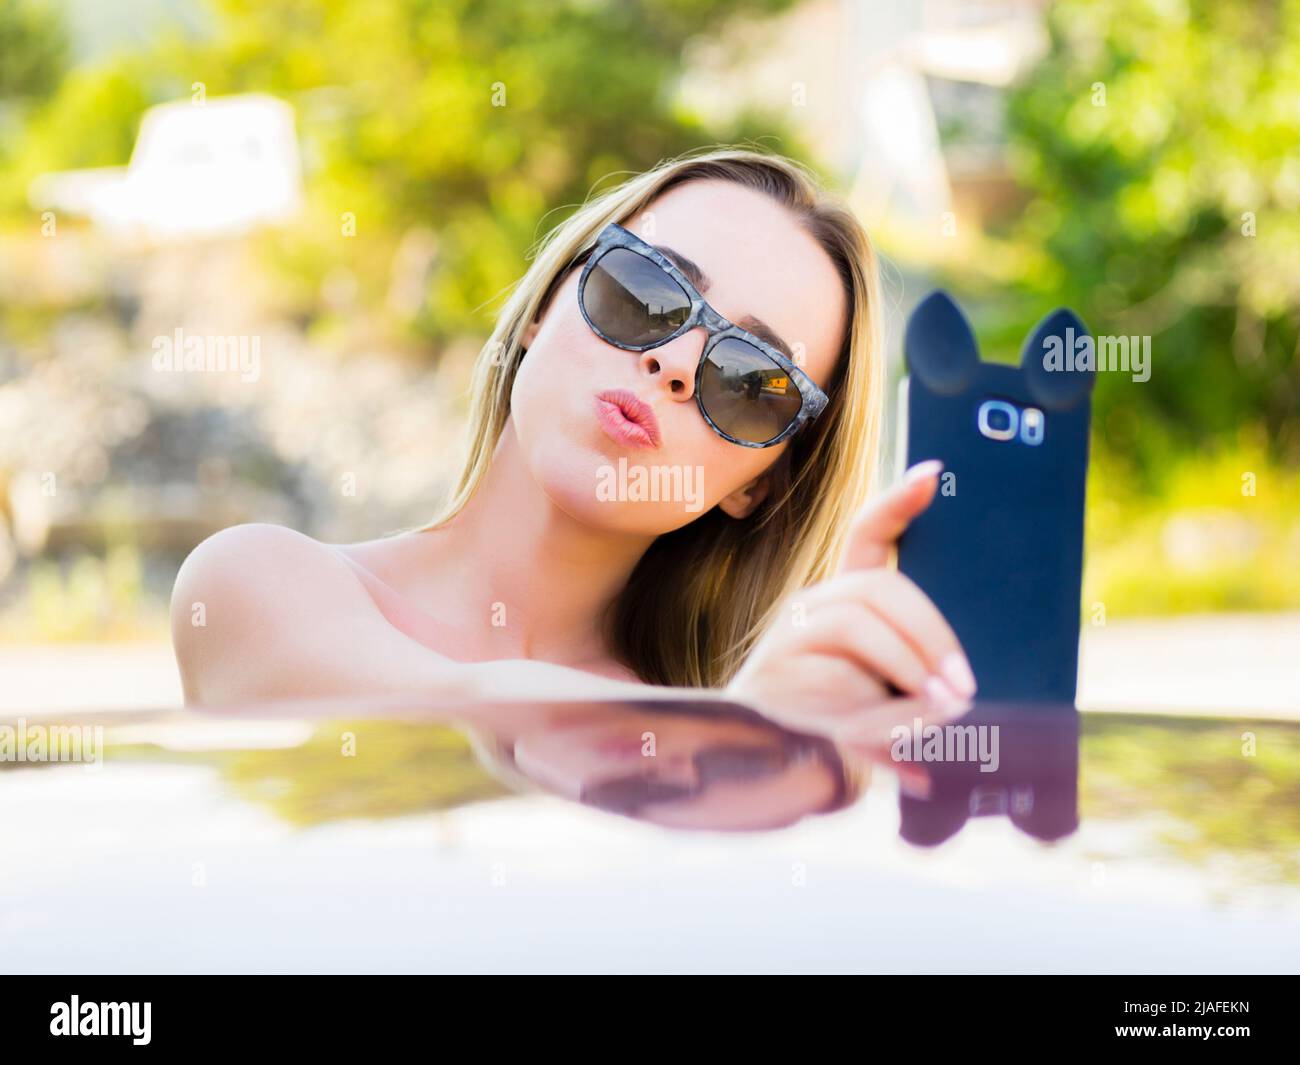 Adolescent teen selfie with fancy smartphone camera in hand wearing sunglasses Stock Photo